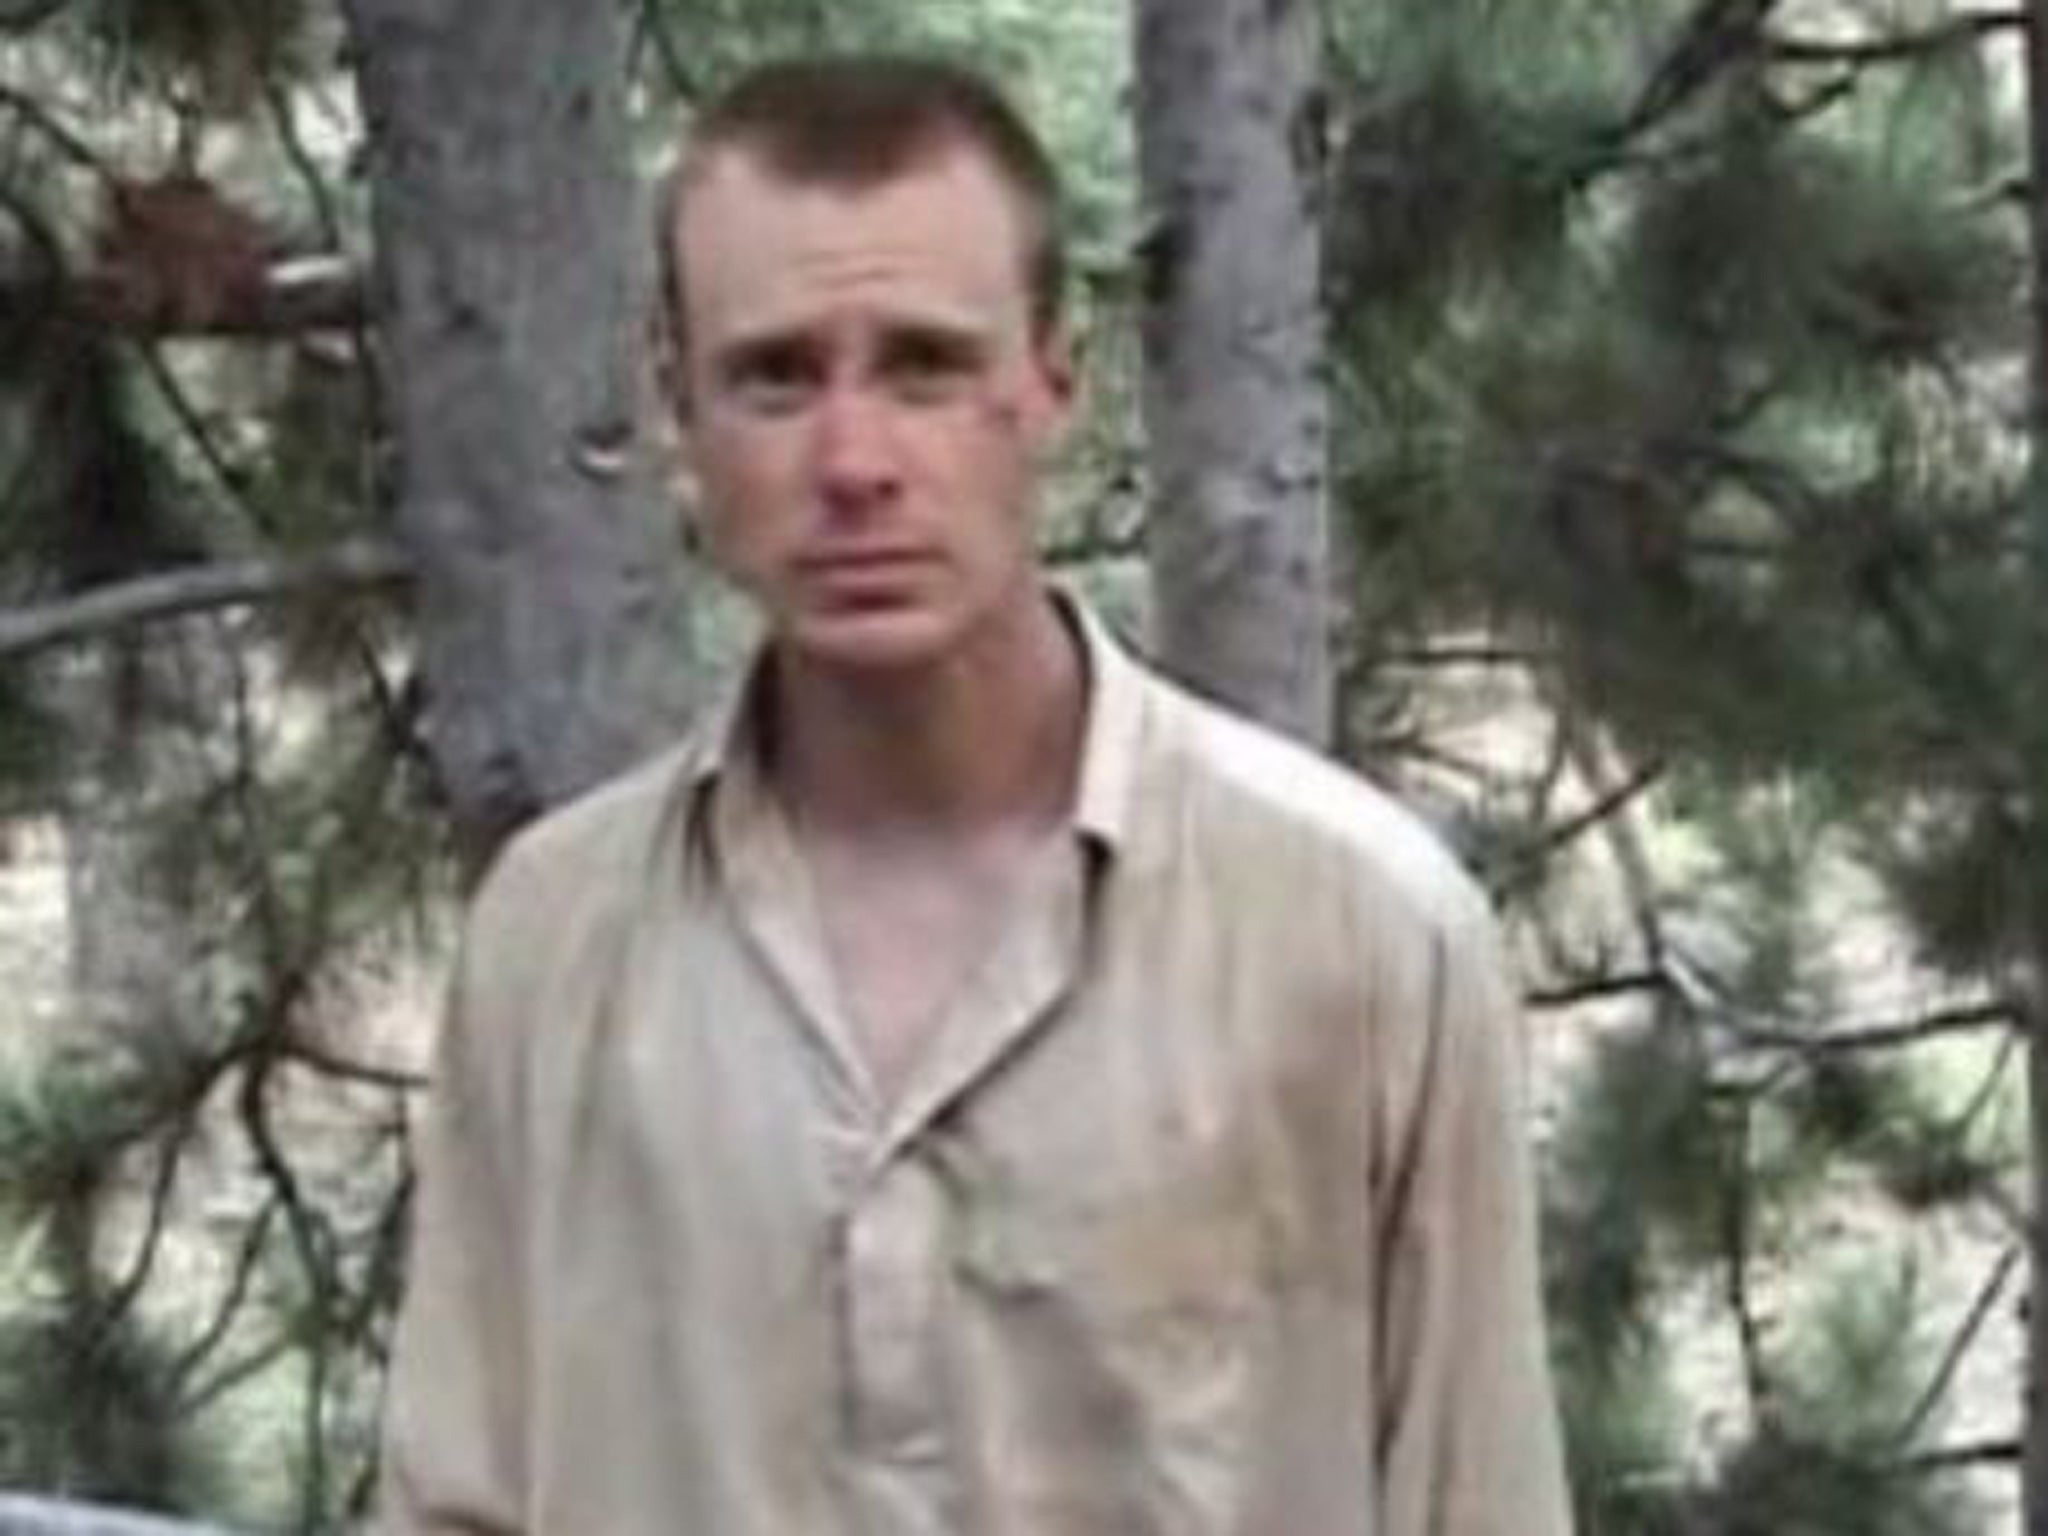 Sergeant Bowe Bergdahl pictured in a Taliban video in 2010